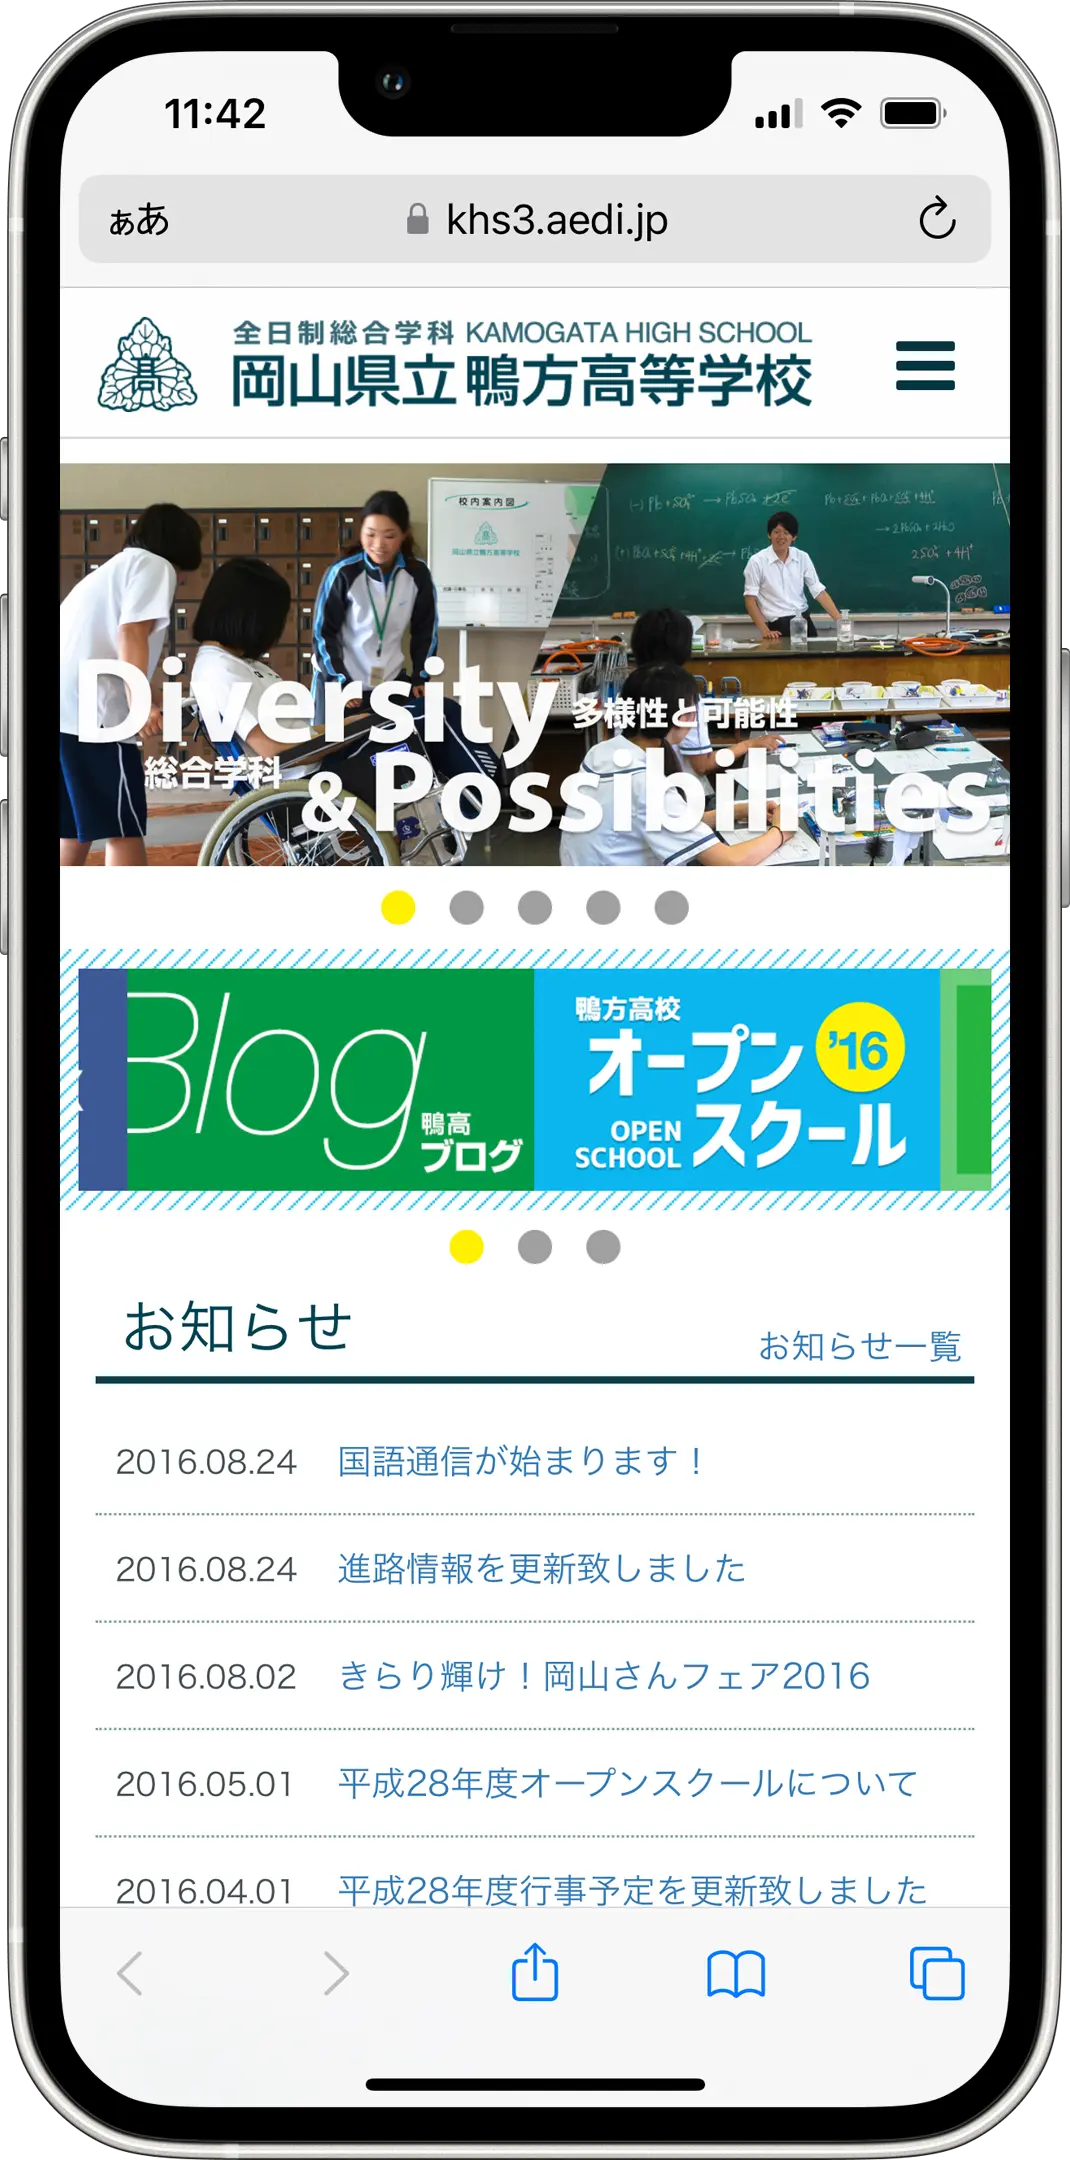 Shinryo Industrial Company in Kurashiki, Okayama Website Smartphone View